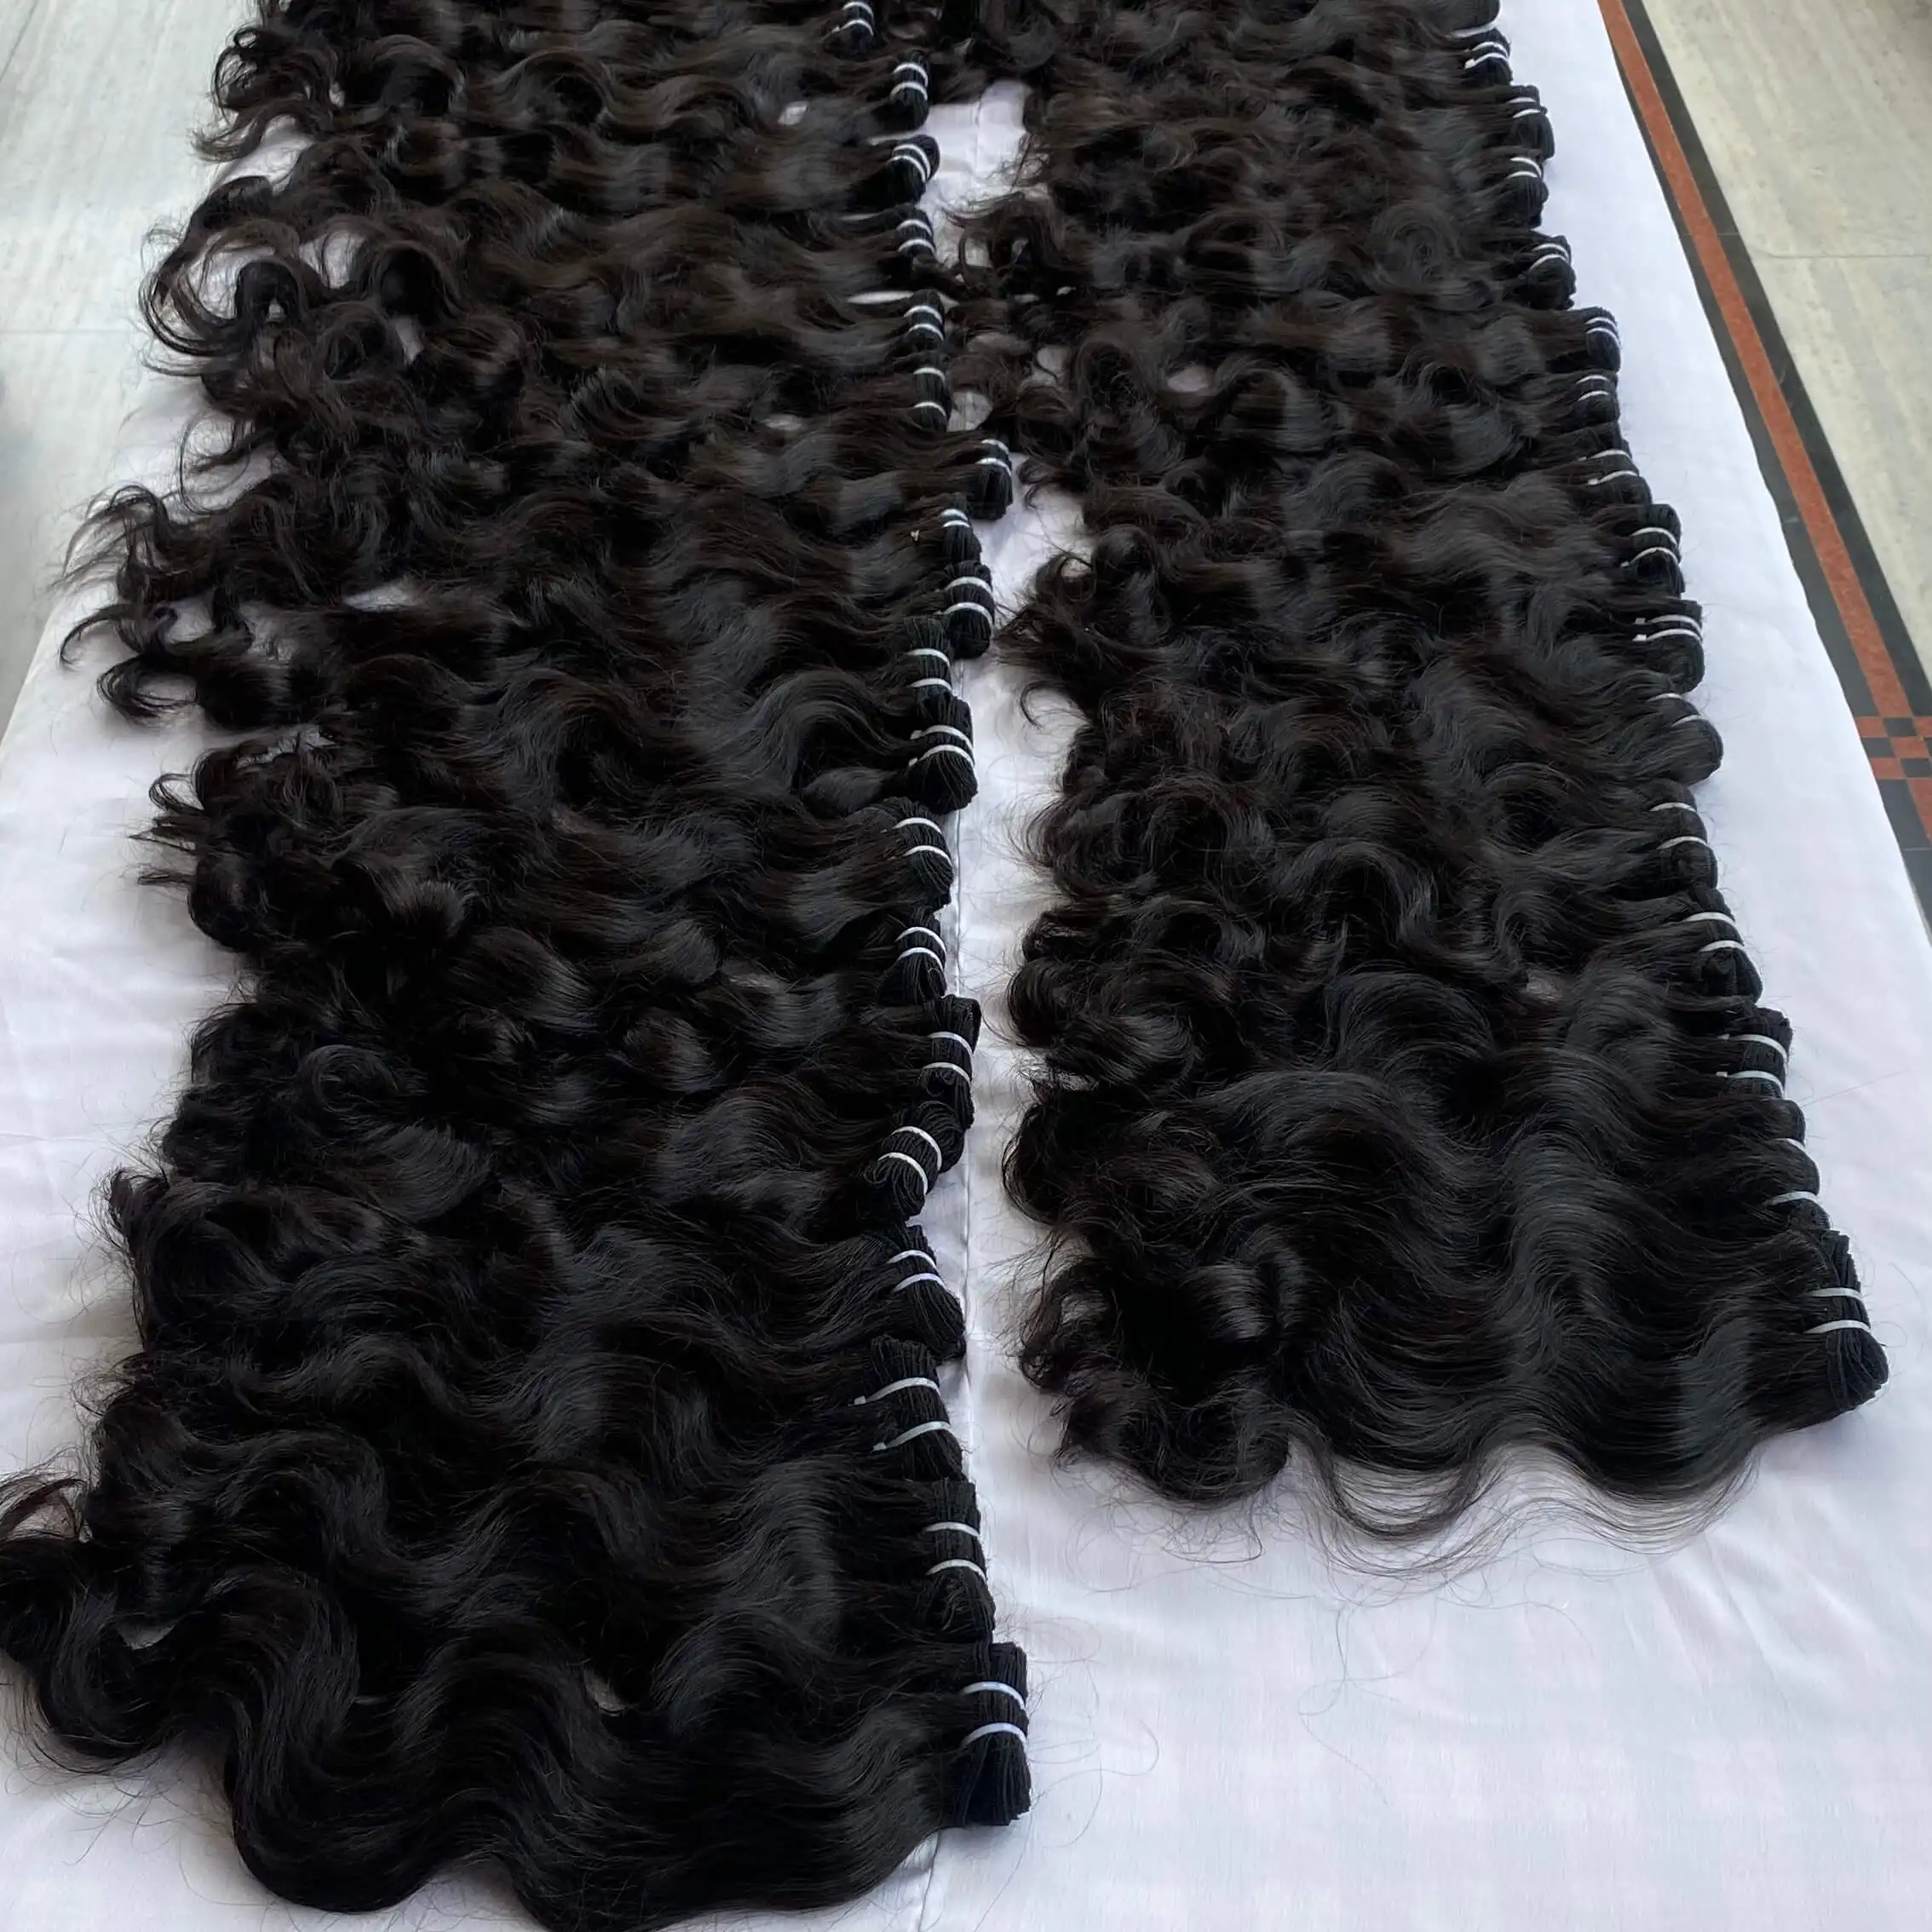 Raw cambodian Unprocessed human hair supplier,Raw cambodian Wavy Remy hair vendor,Raw cambodian curly virgin hair bundles